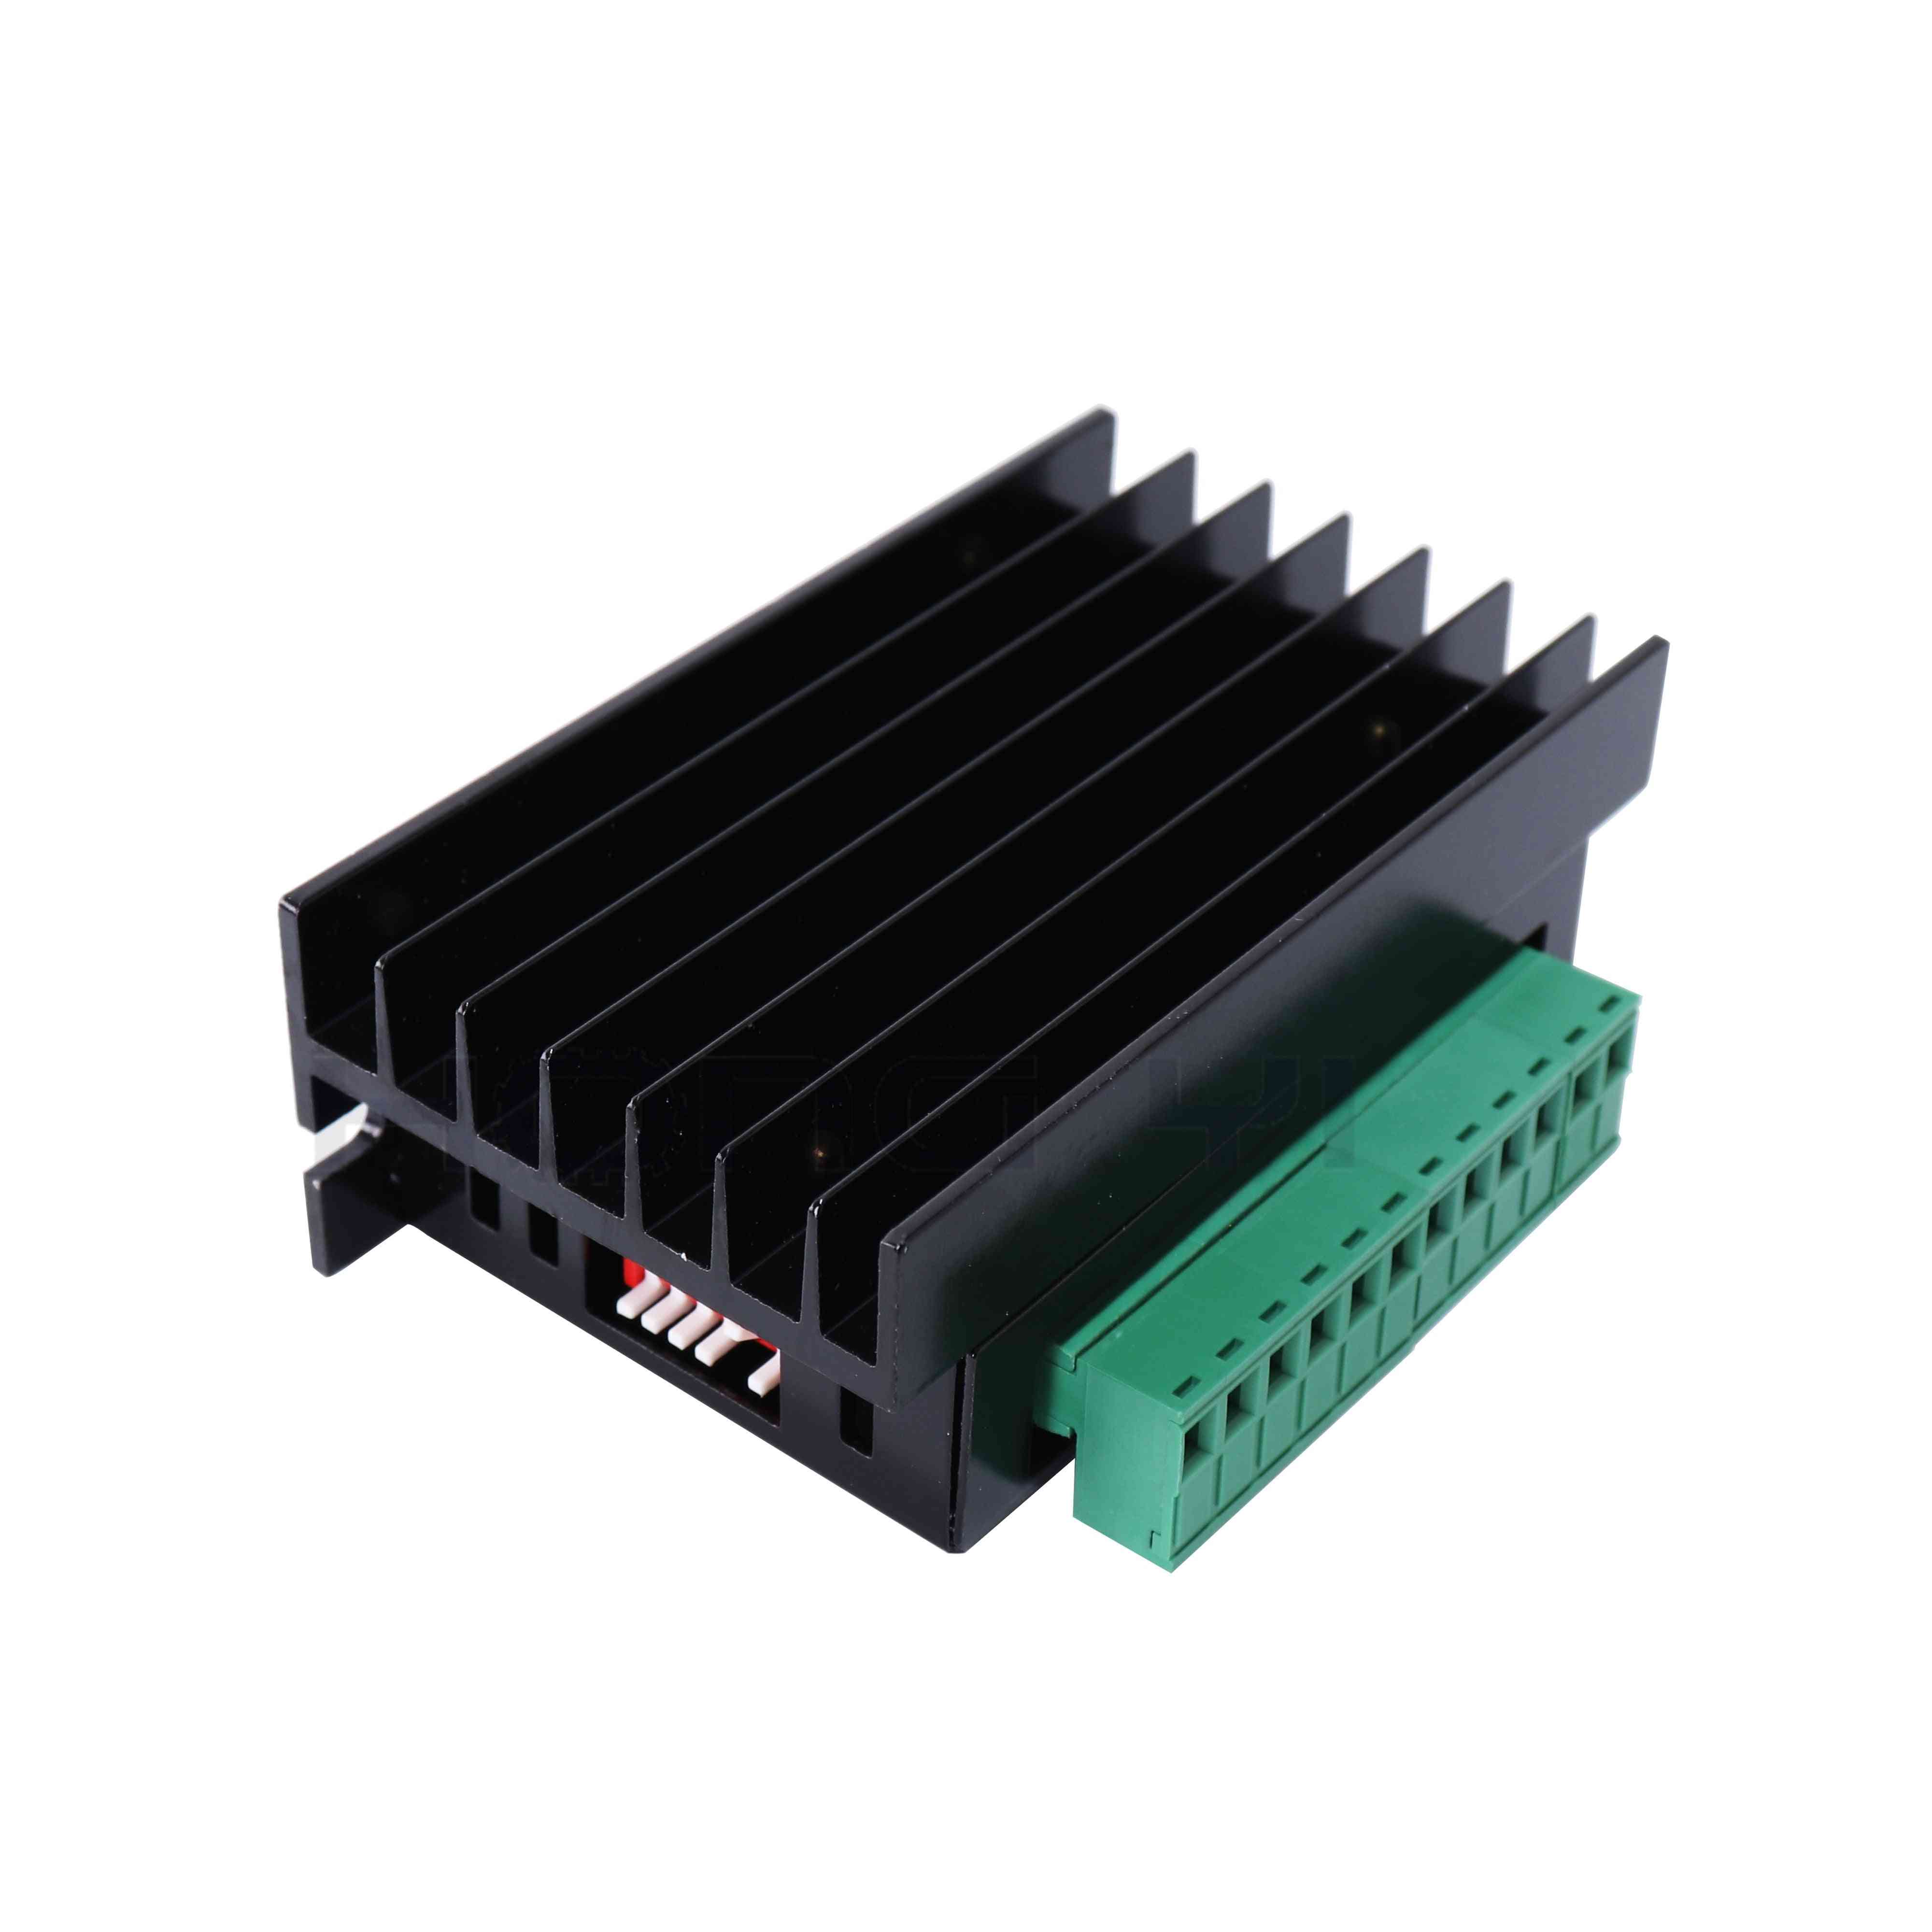 Tb6600 upgrade stappenmotor driver- s109aftg voor nema23 motor, 2 fase 4a cnc router controller voor 3d printer - tb6600 x1pcs